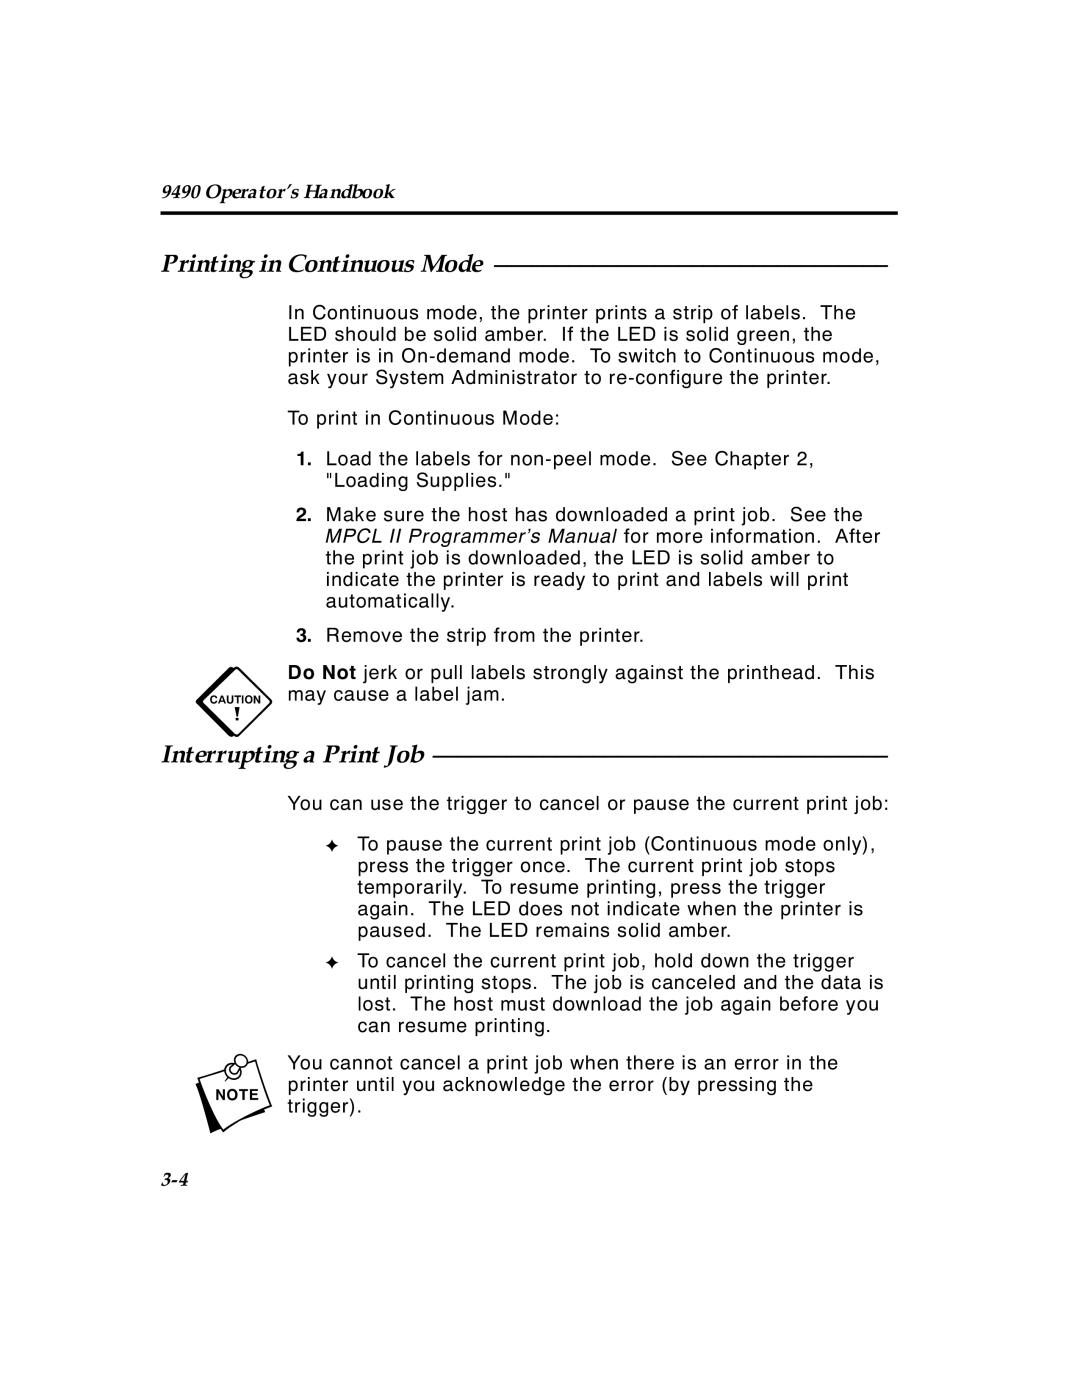 Paxar 4 manual Printing in Continuous Mode, Interrupting a Print Job, Operator’s Handbook 